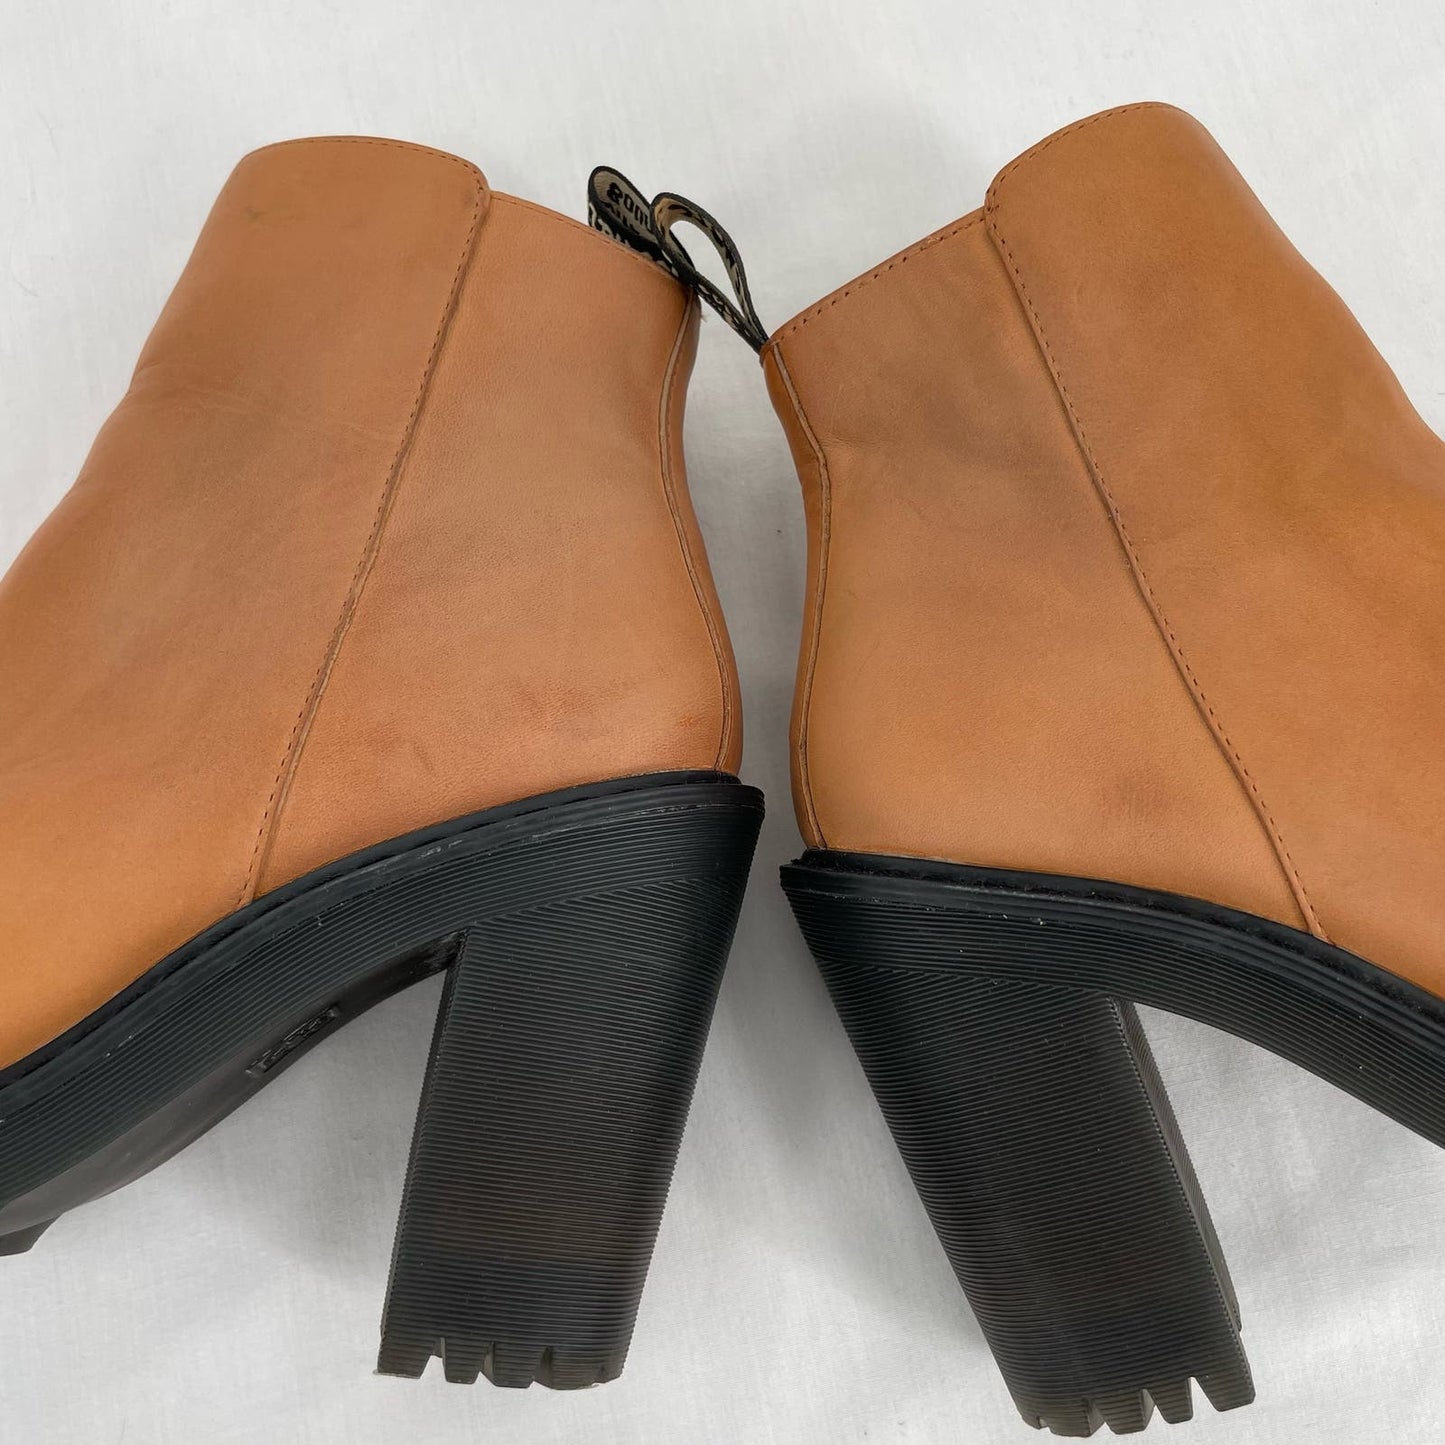 Dr. Martens Magdalena Cognac Leather Heeled Boots Orange Tan Grunge Indie Size 9